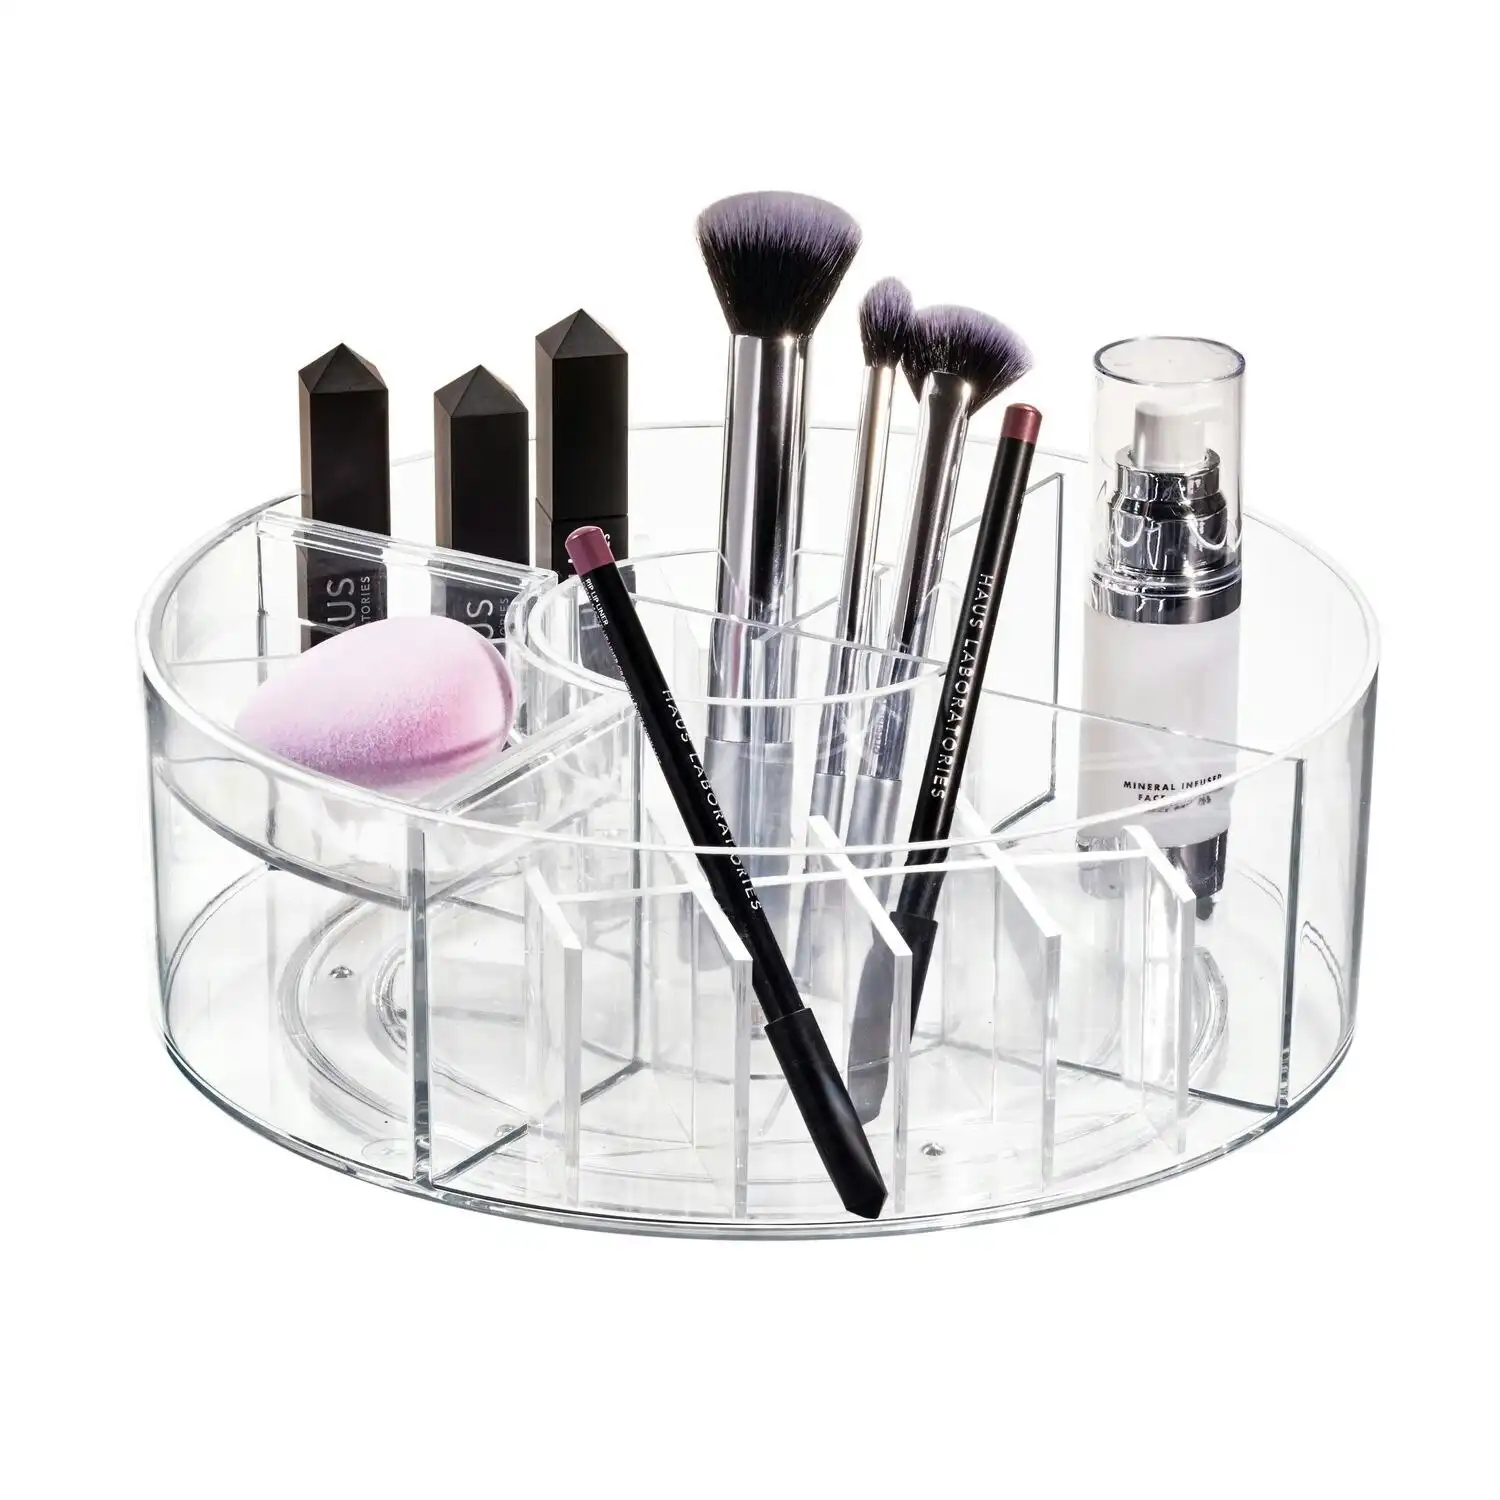 Idesign 25.4cm Cosmetic Carousel Makeup Storage Organiser Clear/Matte White